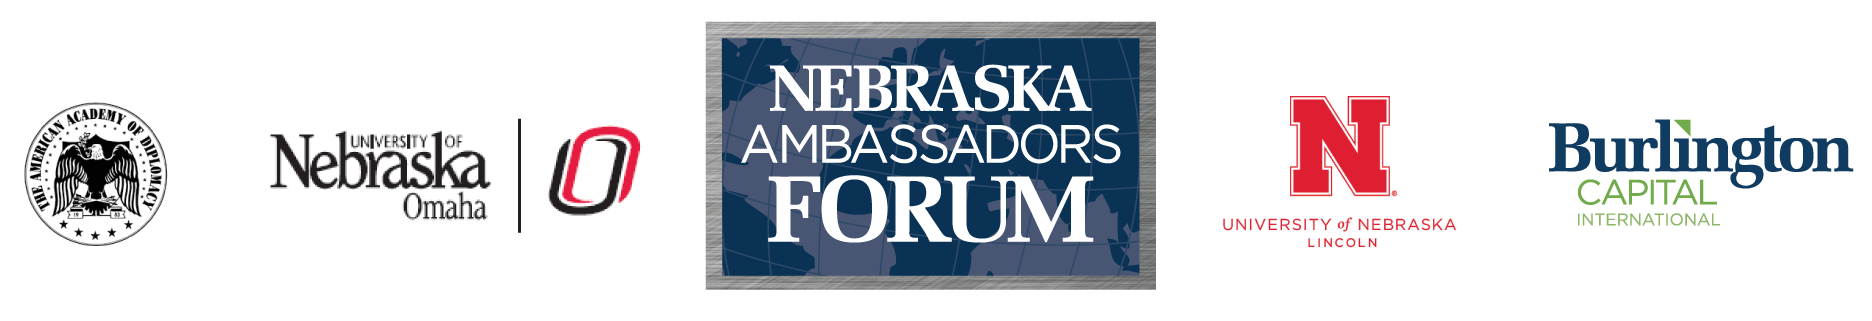 Nebraska Ambassadors Forum 